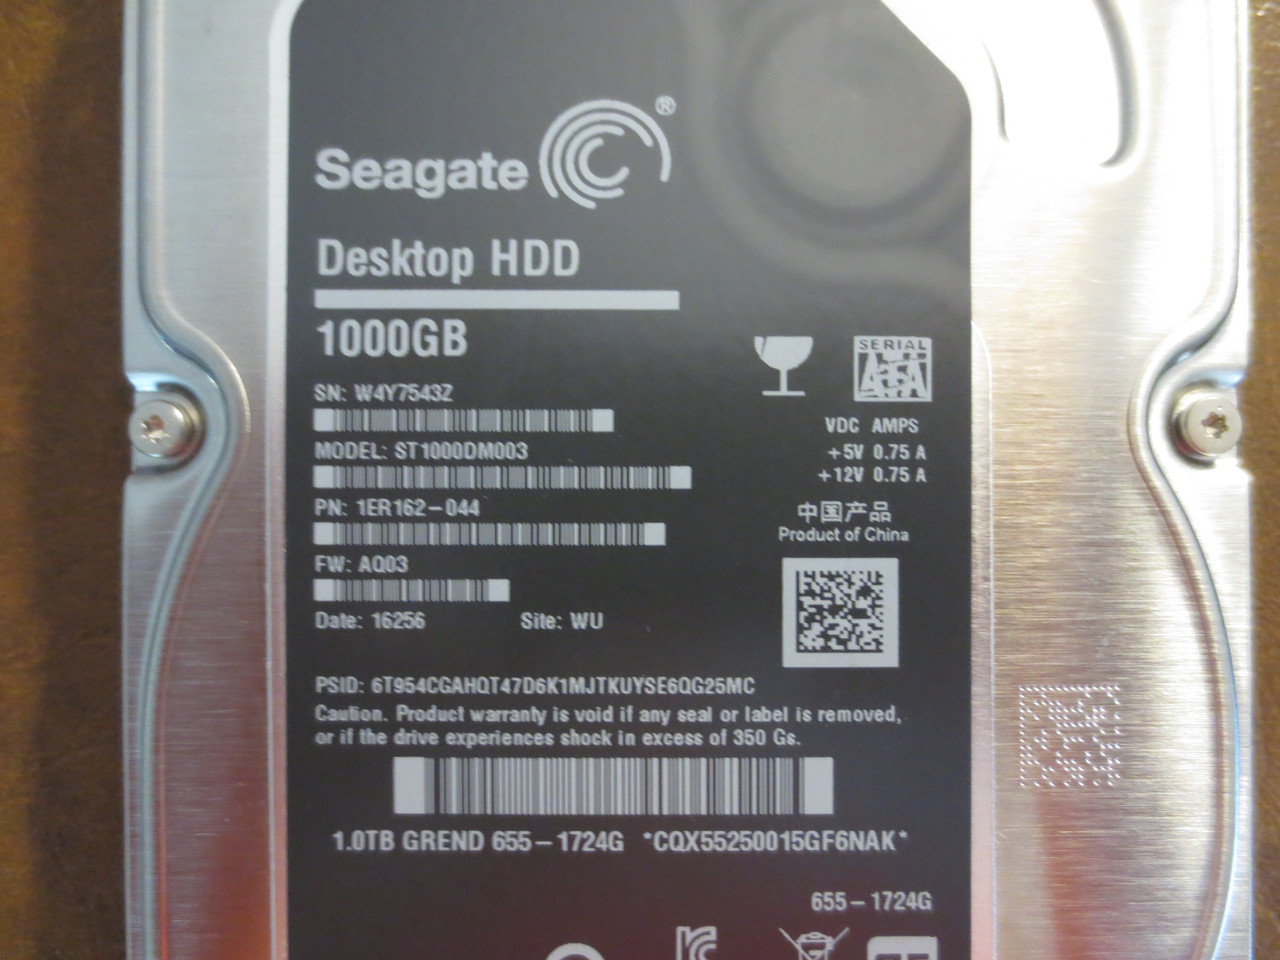 Seagate ST1000DM003 1ER162-044 FW:AQ03 WU Apple#655-1724G 1000gb Sata -  Effective Electronics